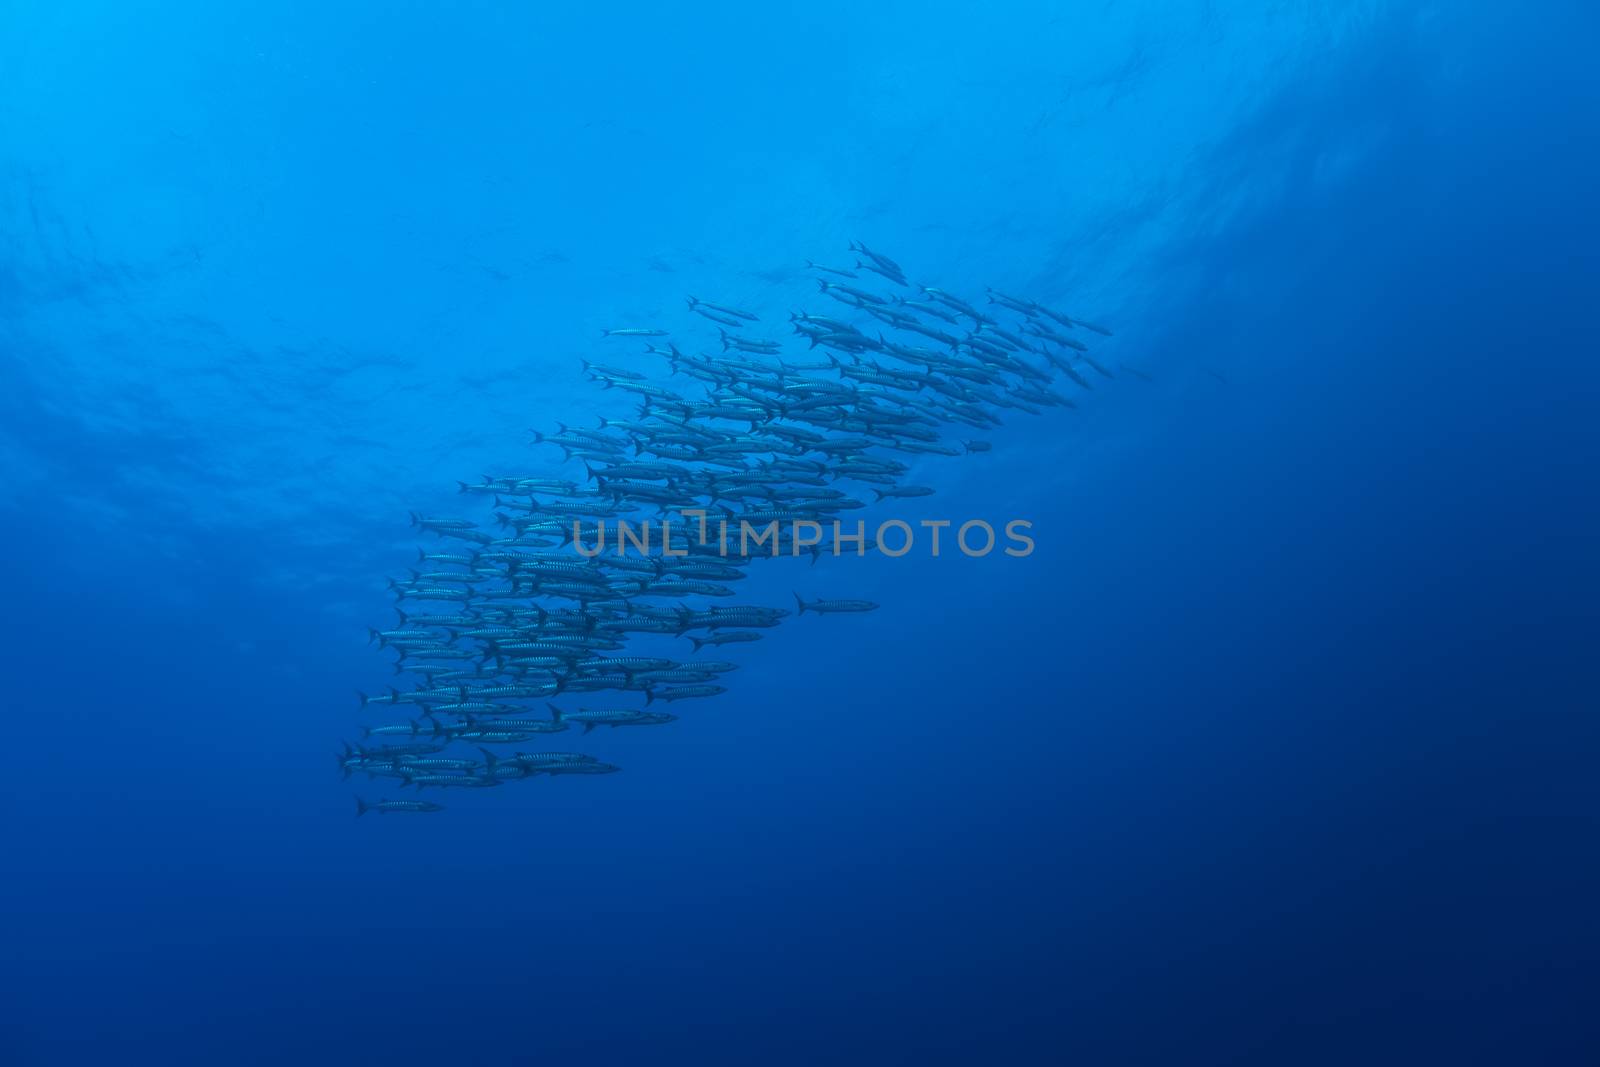 barracuda underwater picture Sudan Red sea diving safari by desant7474